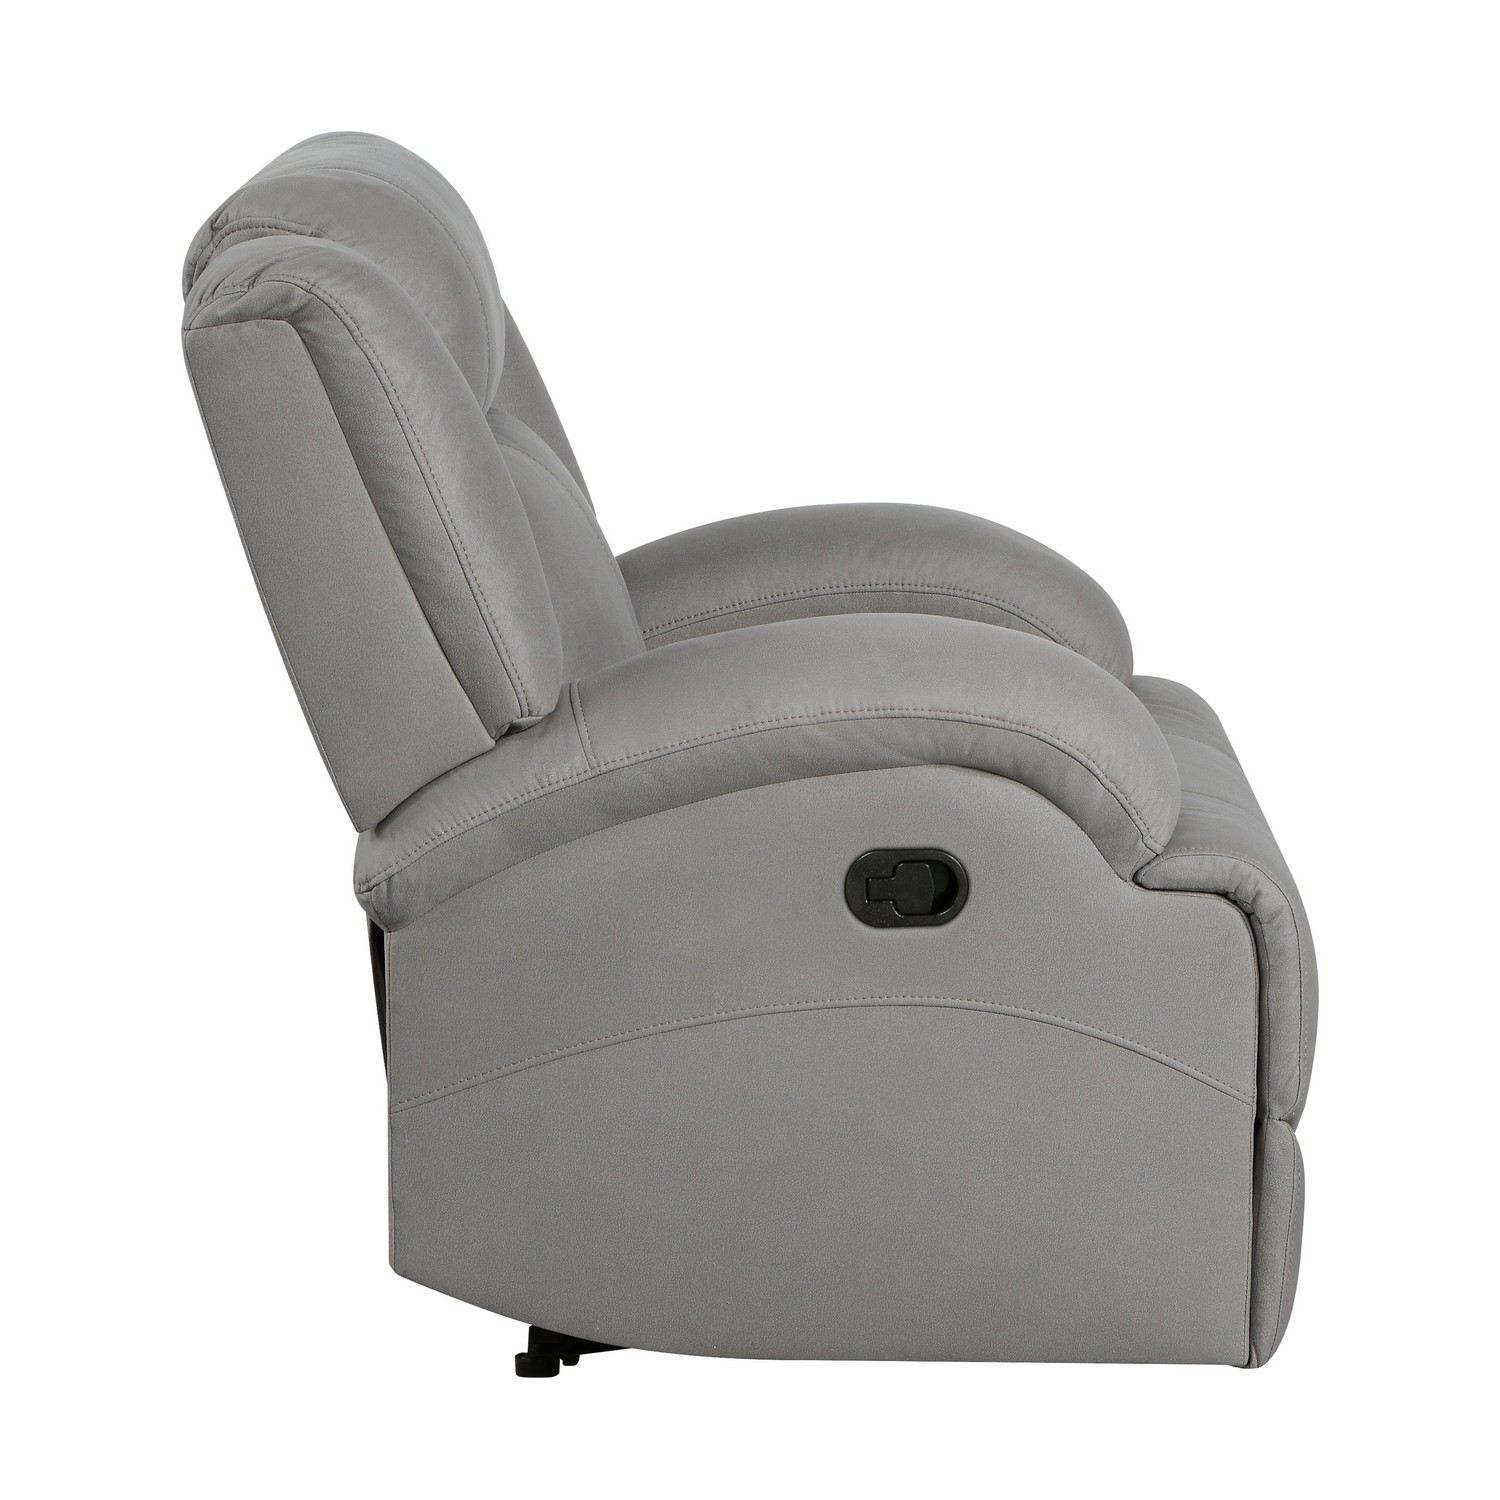 Homelegance Camryn Reclining Chair - Gray